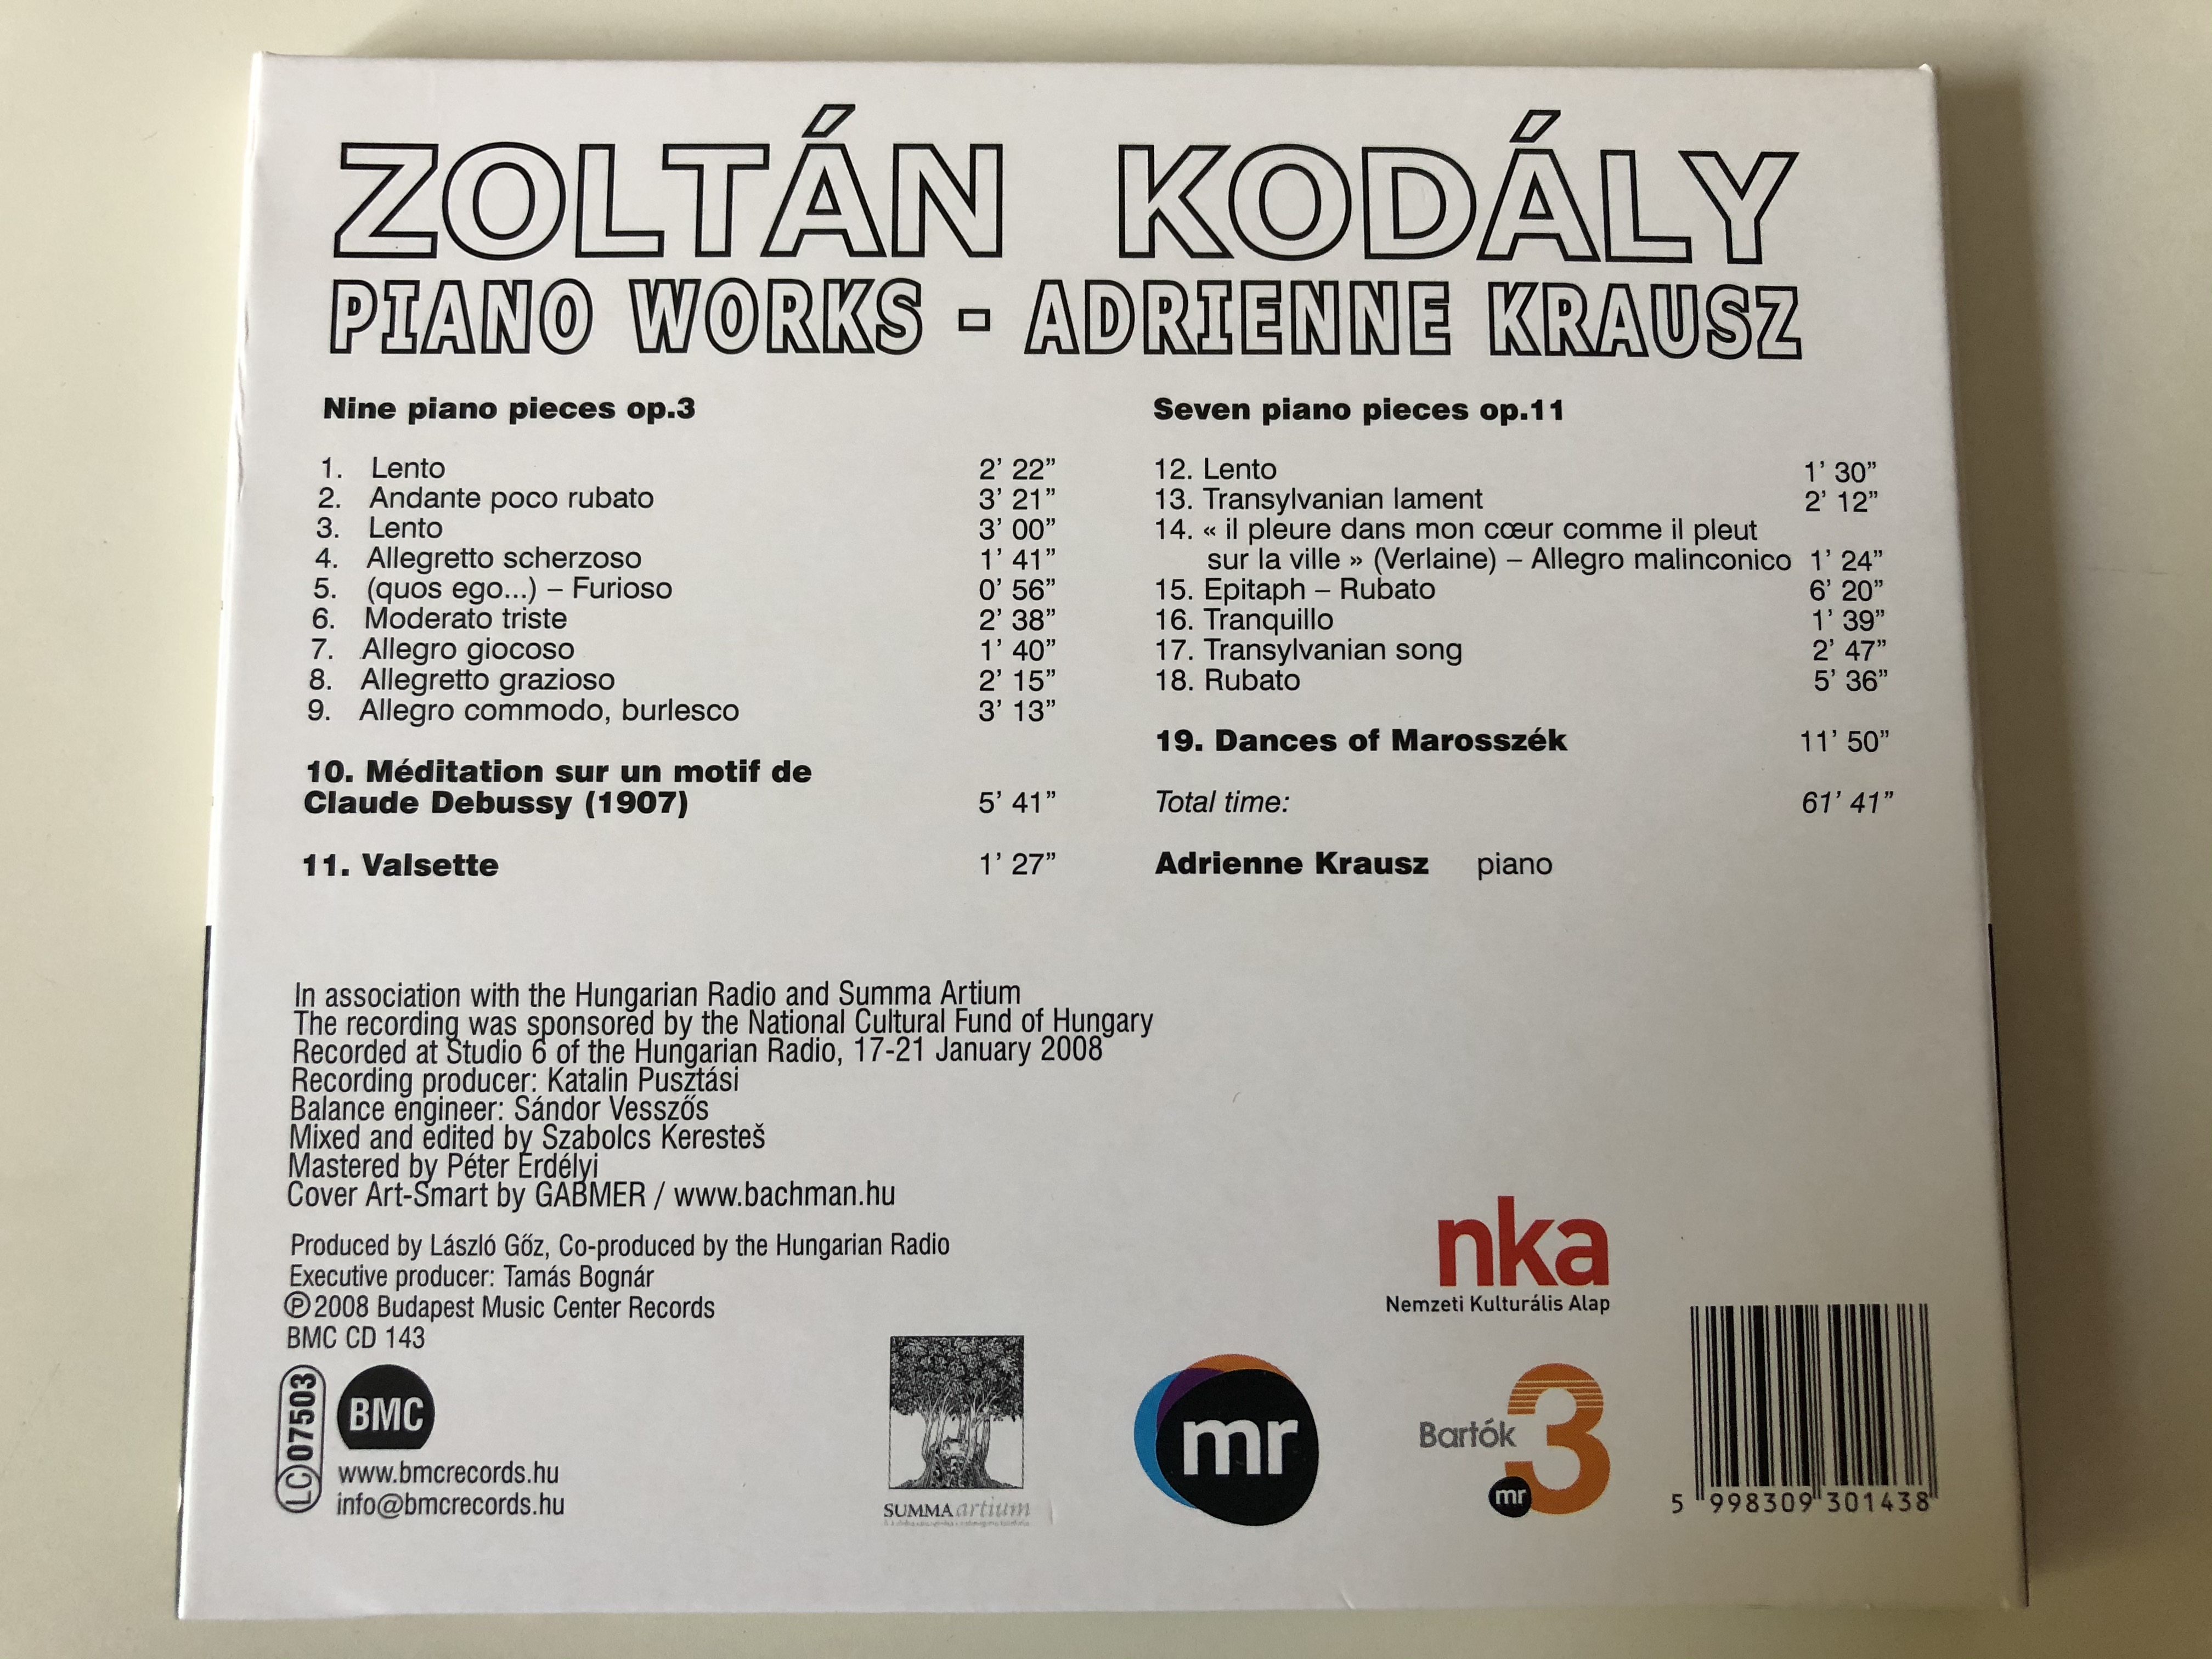 zolt-n-kod-ly-piano-works-adrienne-krausz-budapest-music-center-records-audio-cd-2008-bmc-cd143-12-.jpg